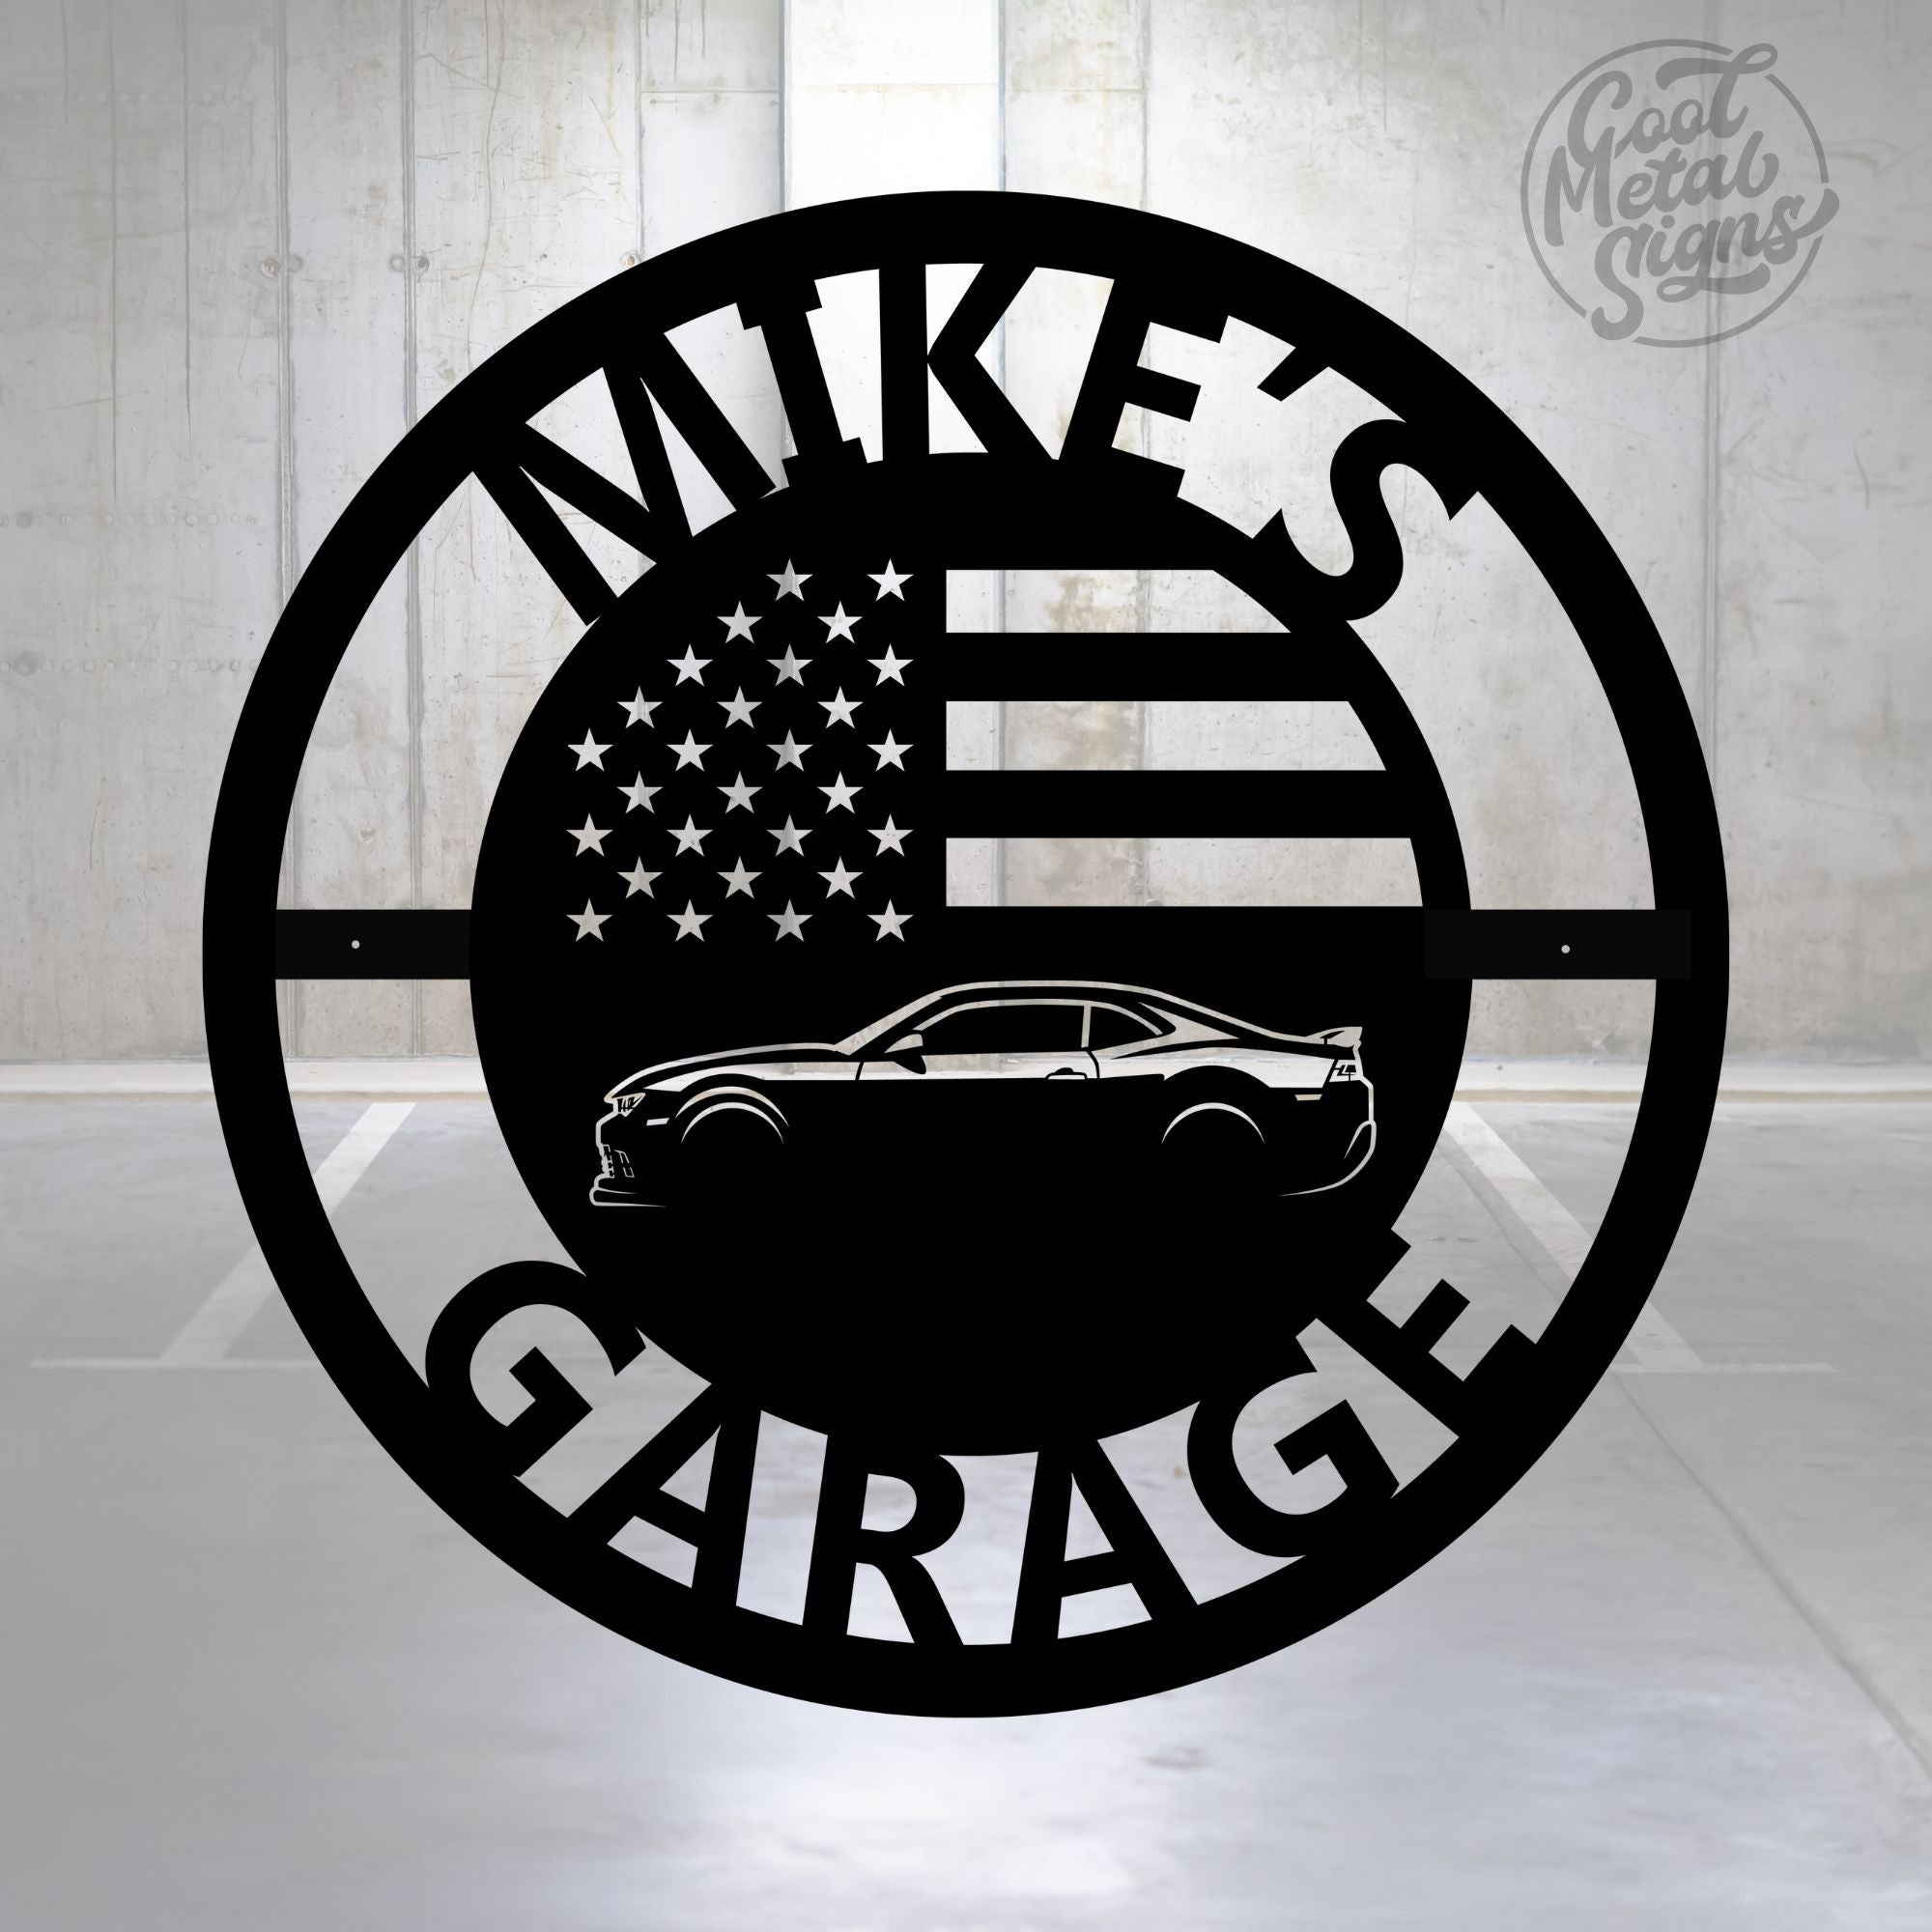 Personalized Camaro Z28 Garage Sign - Cool Metal Signs